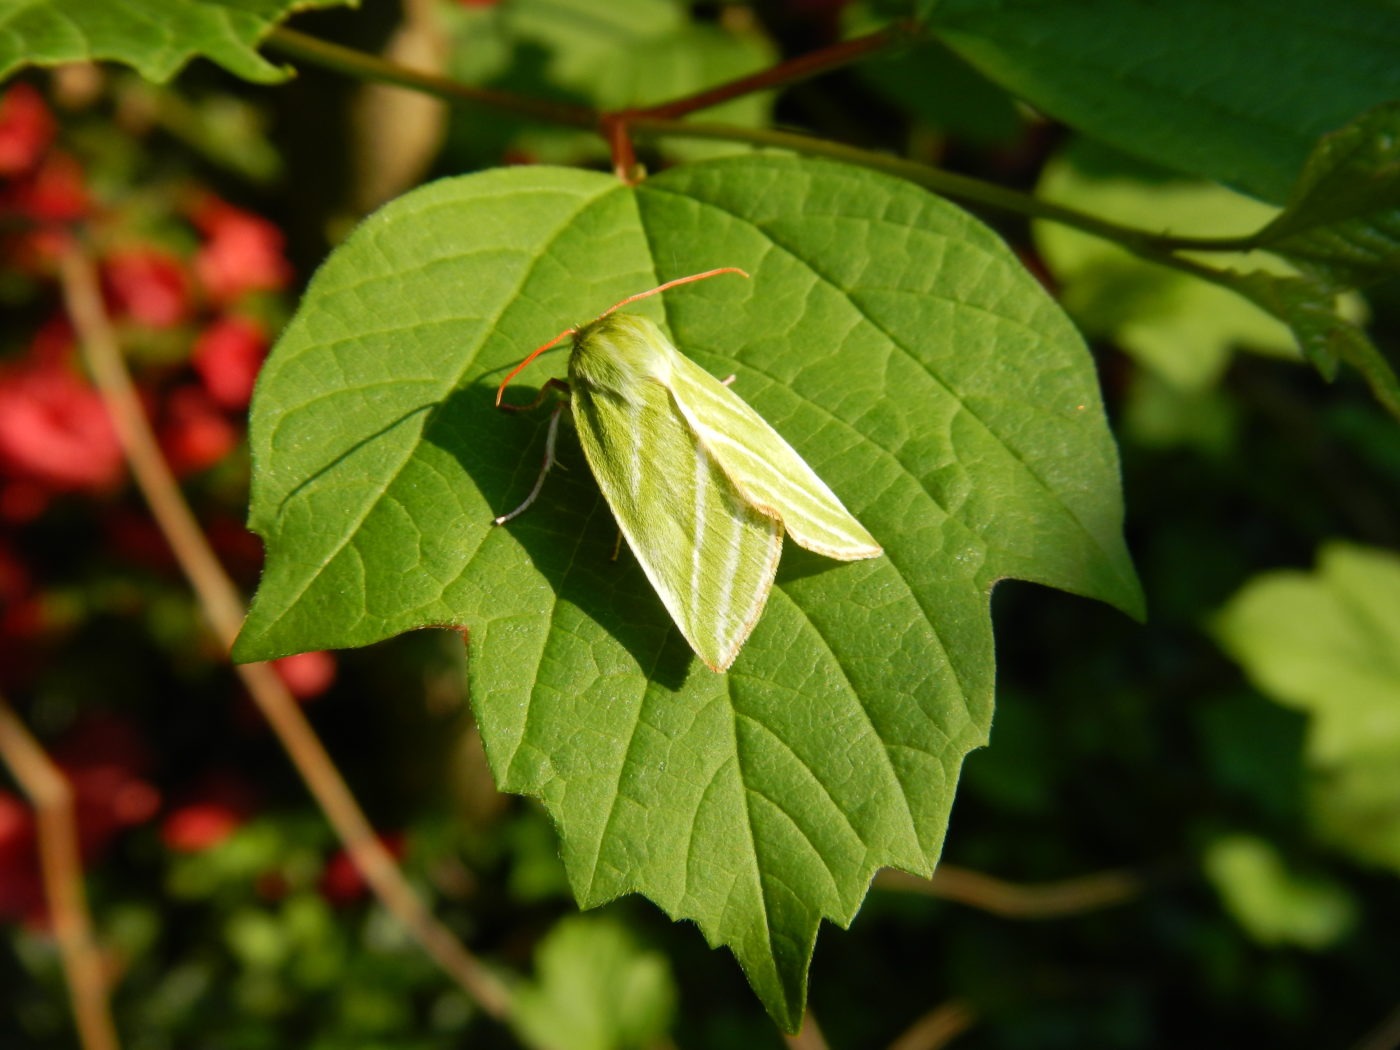 Green Silver-lines moth, Pseudoips prasinana, on a green leaf